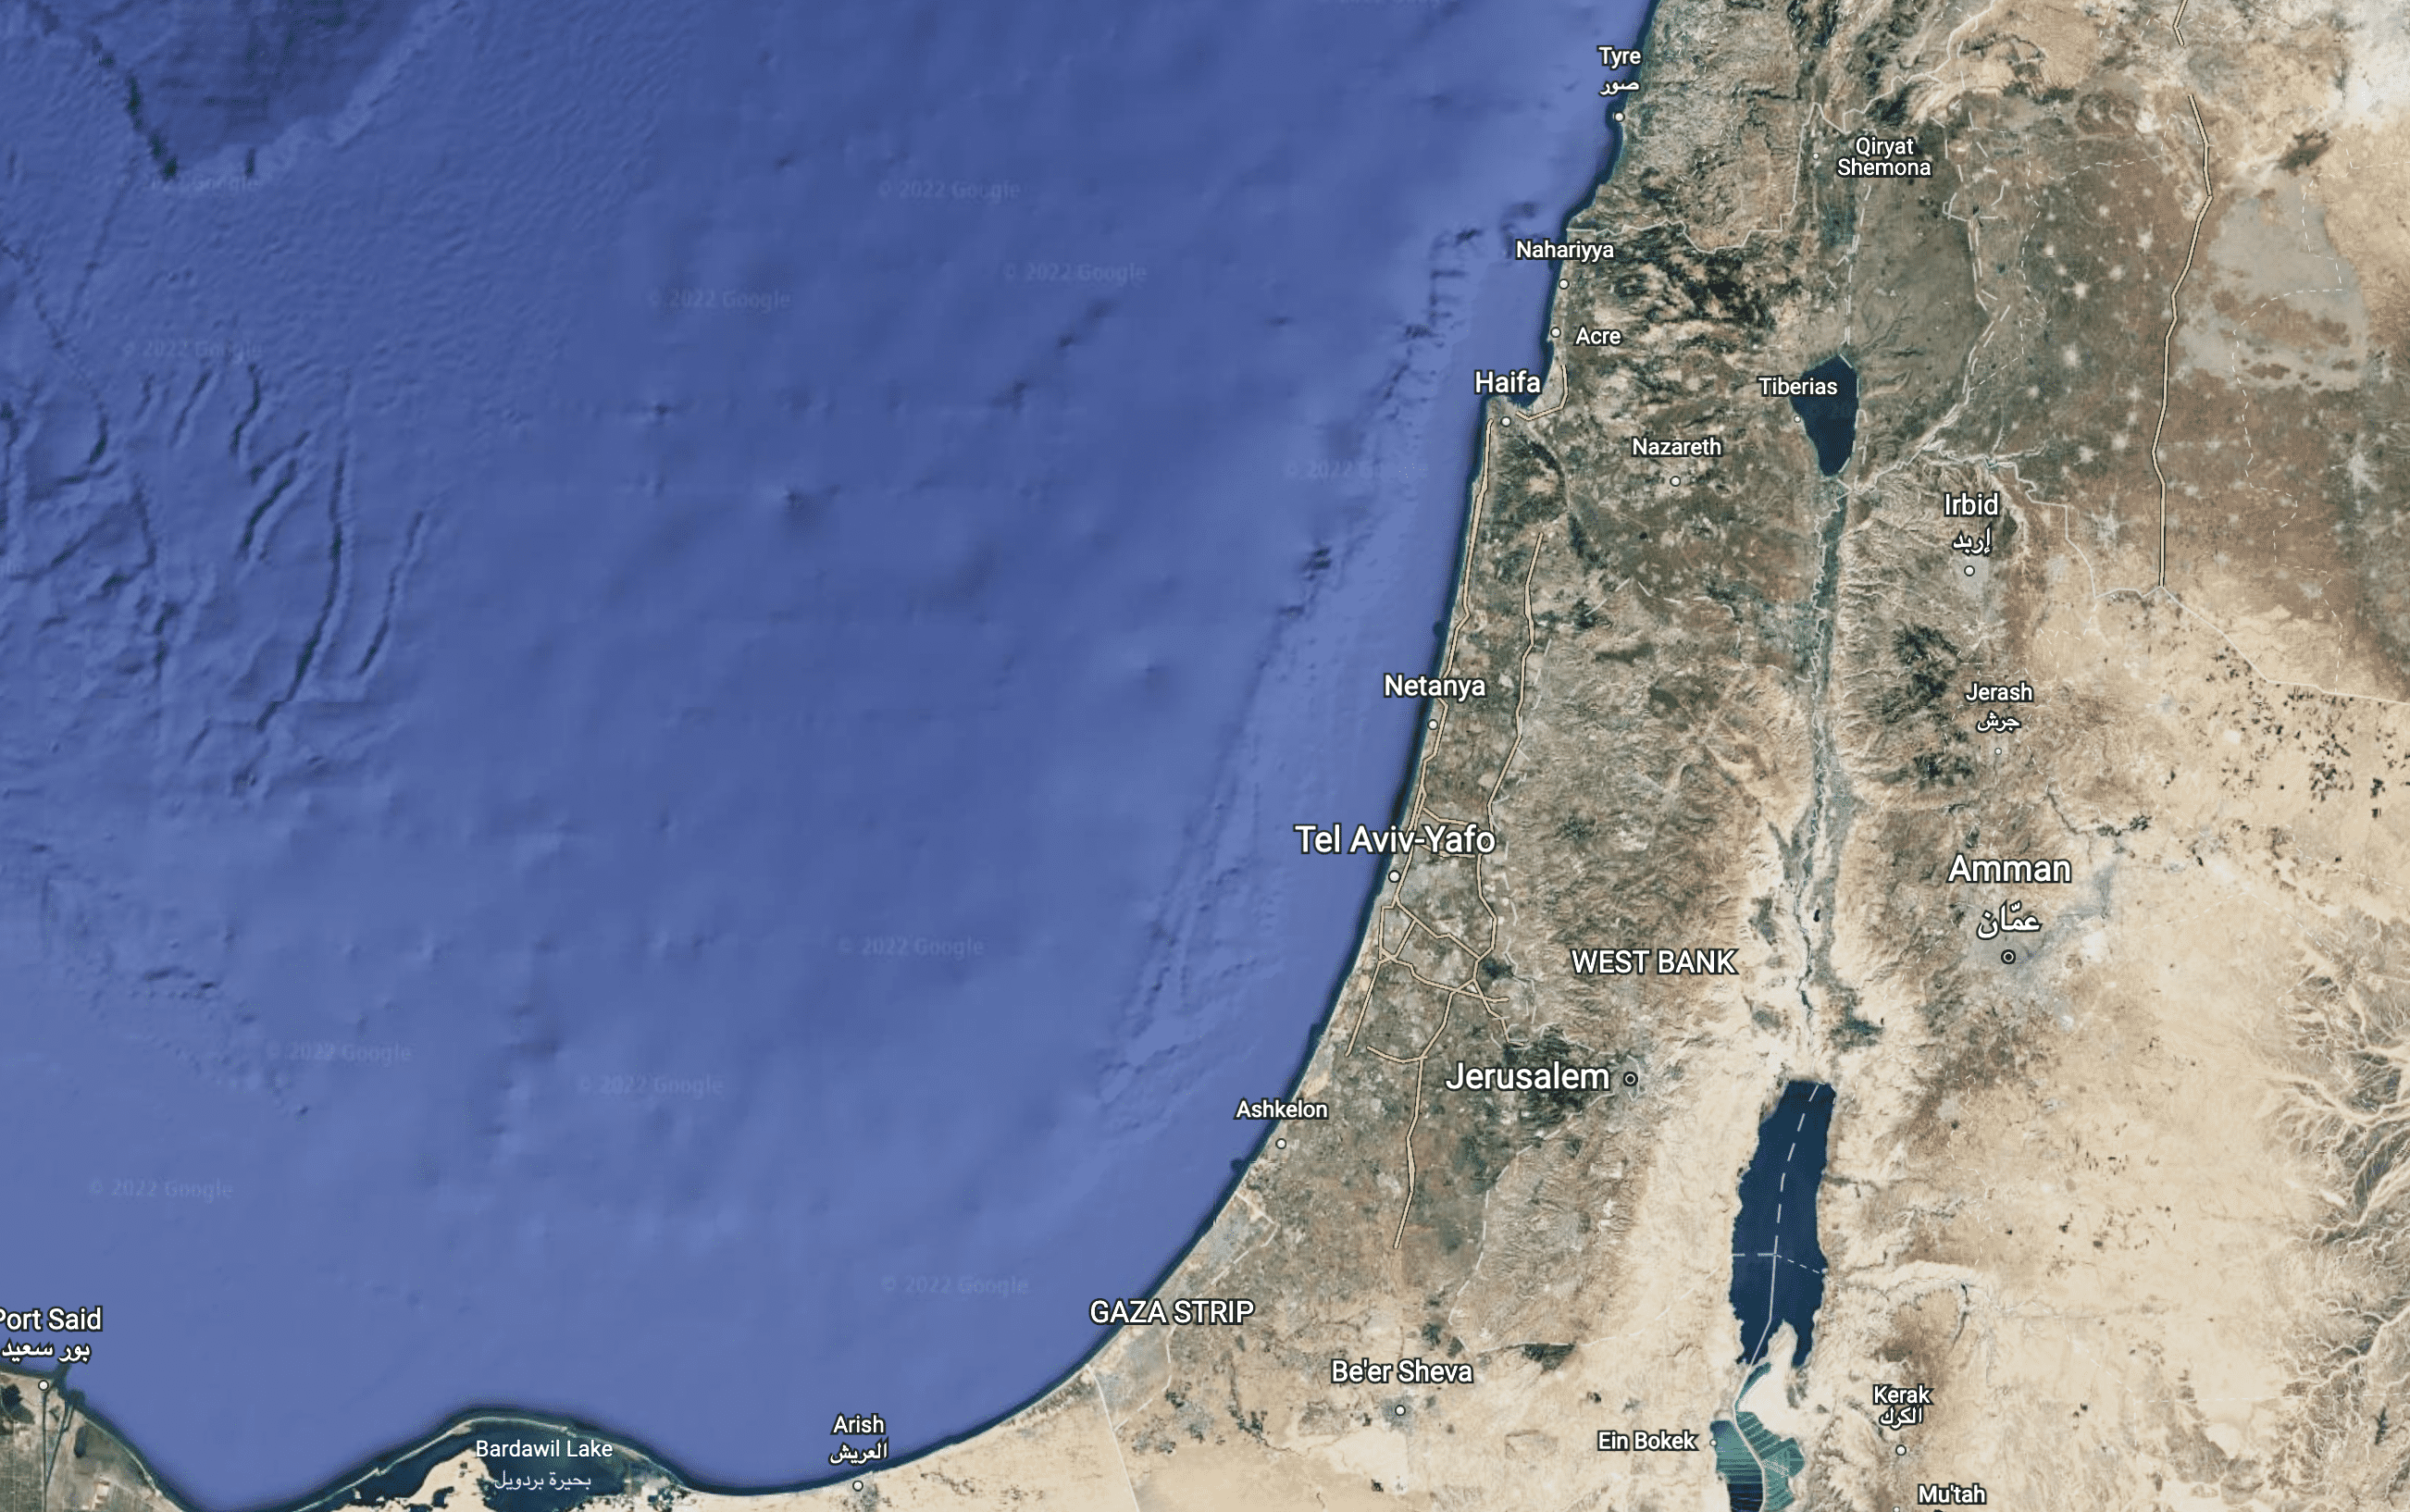 Google Earth Satellite Image of Palestine